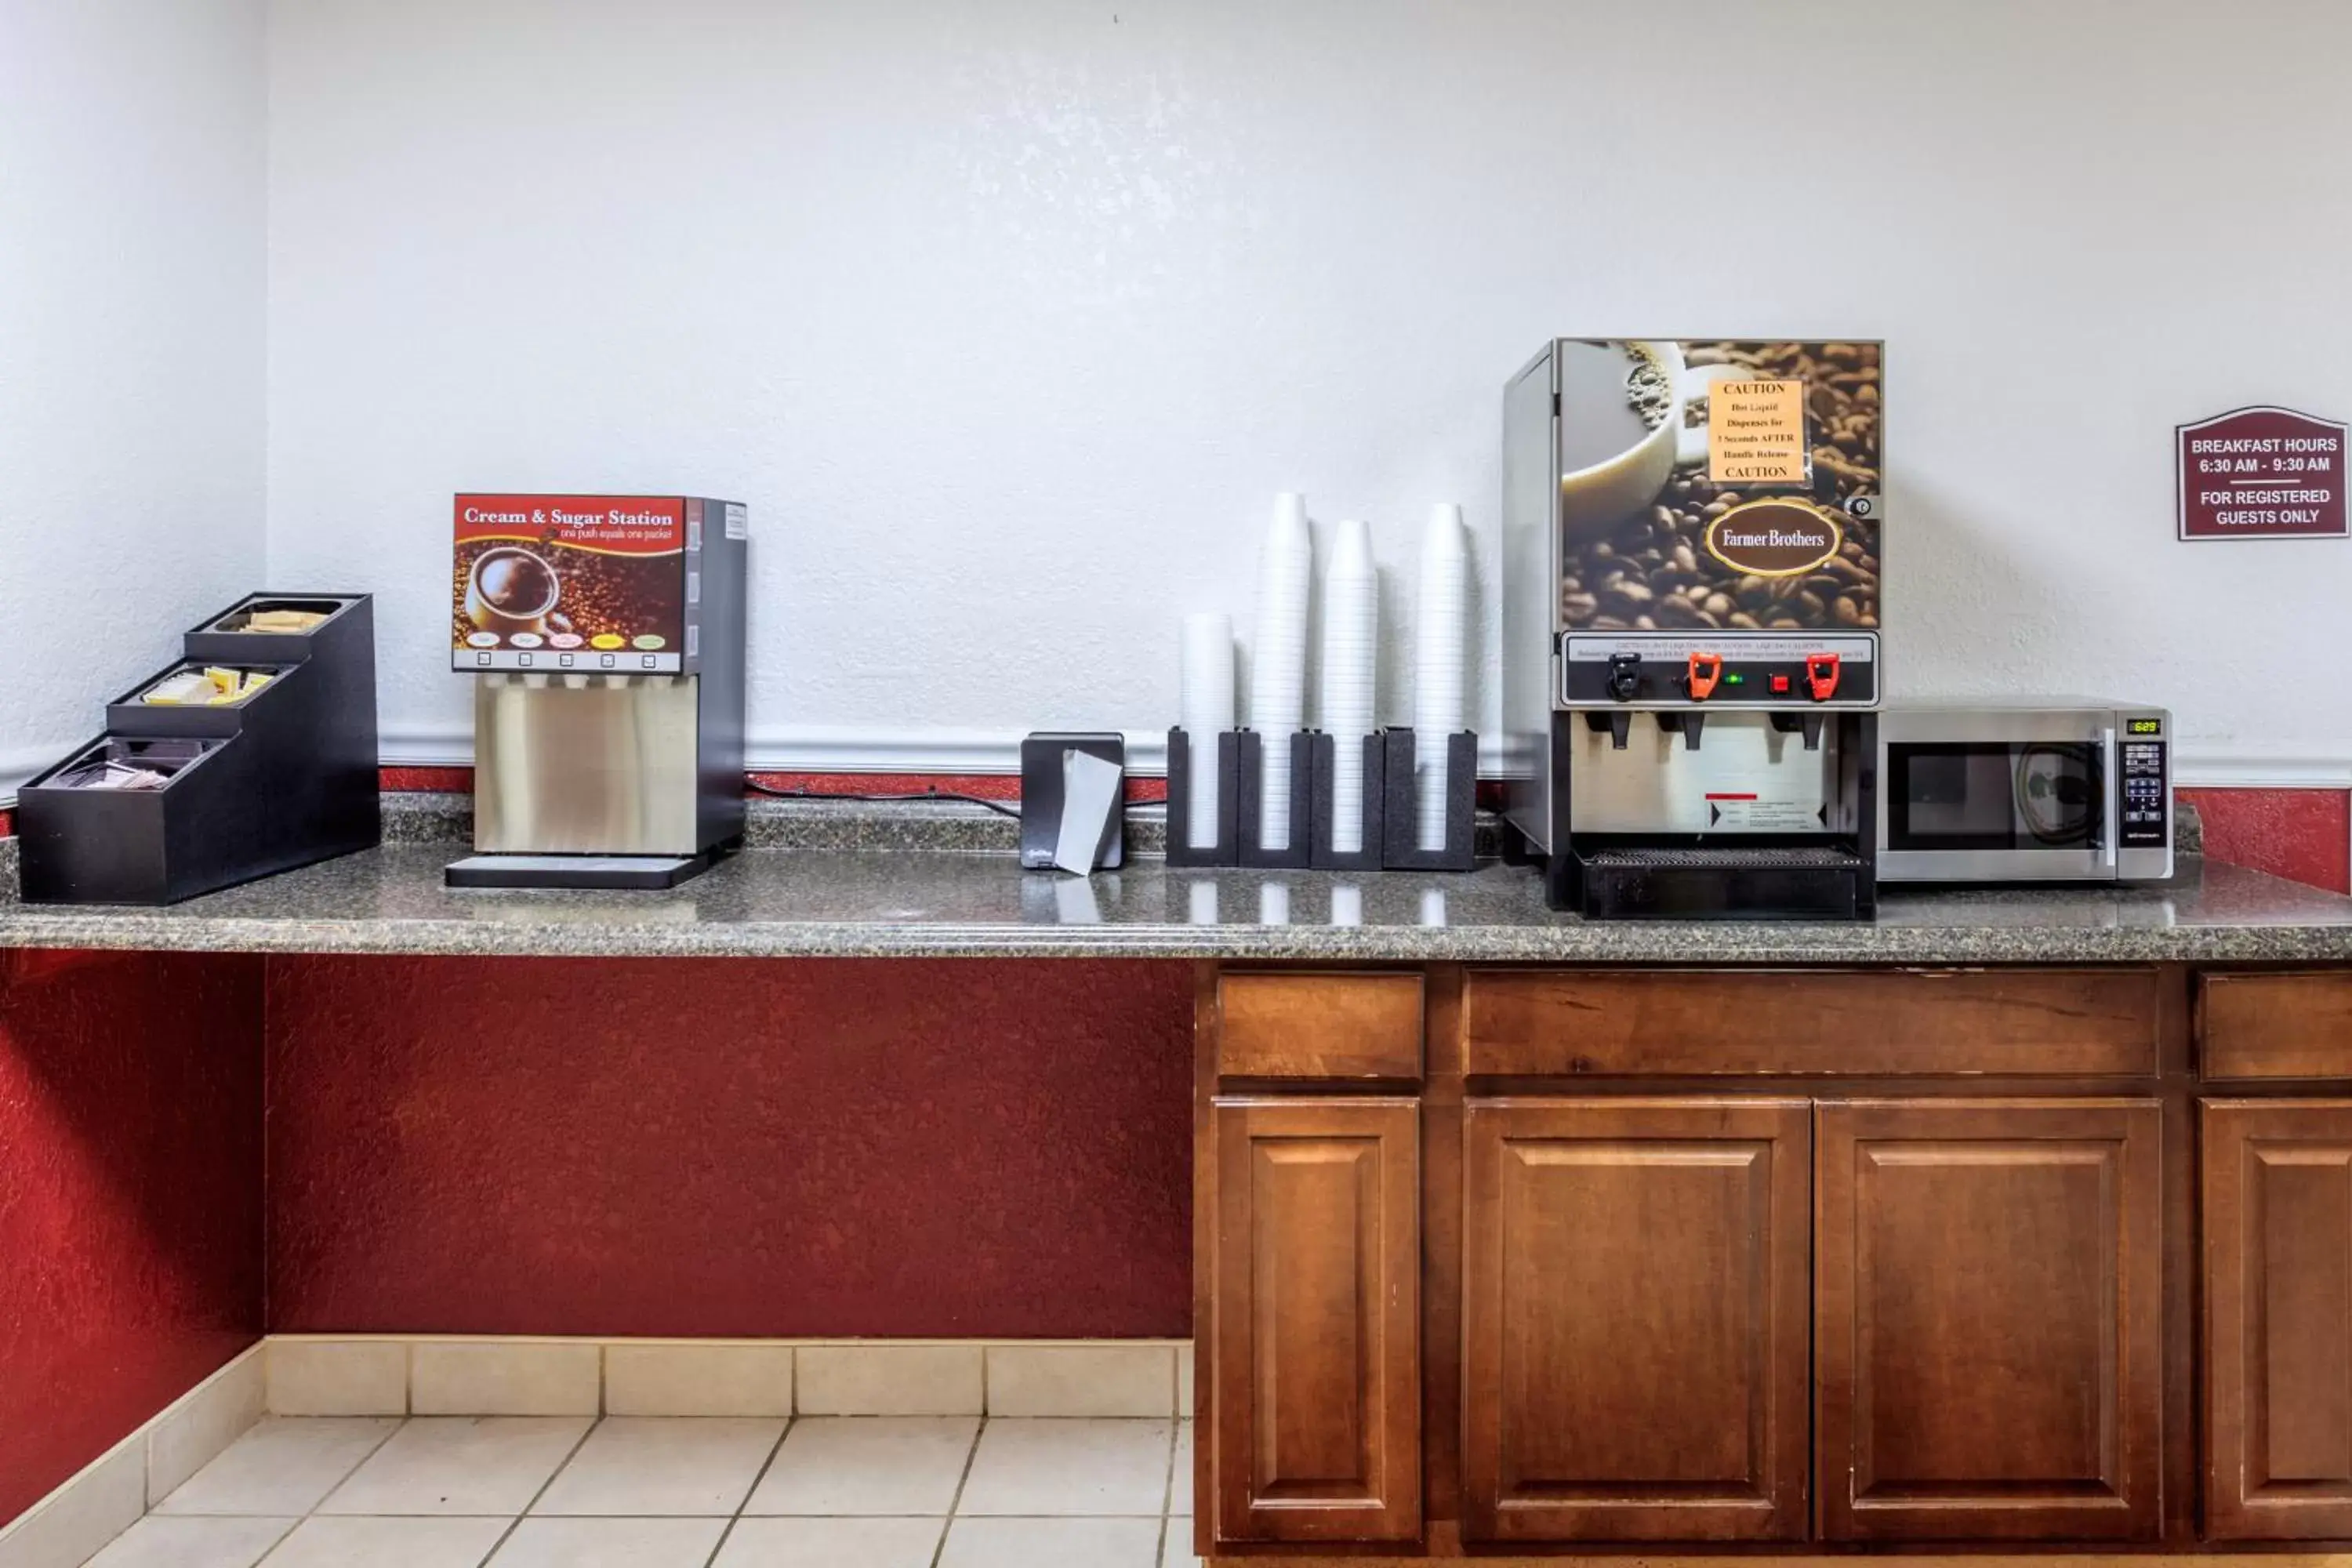 Coffee/tea facilities, Lobby/Reception in Branson Towers Hotel